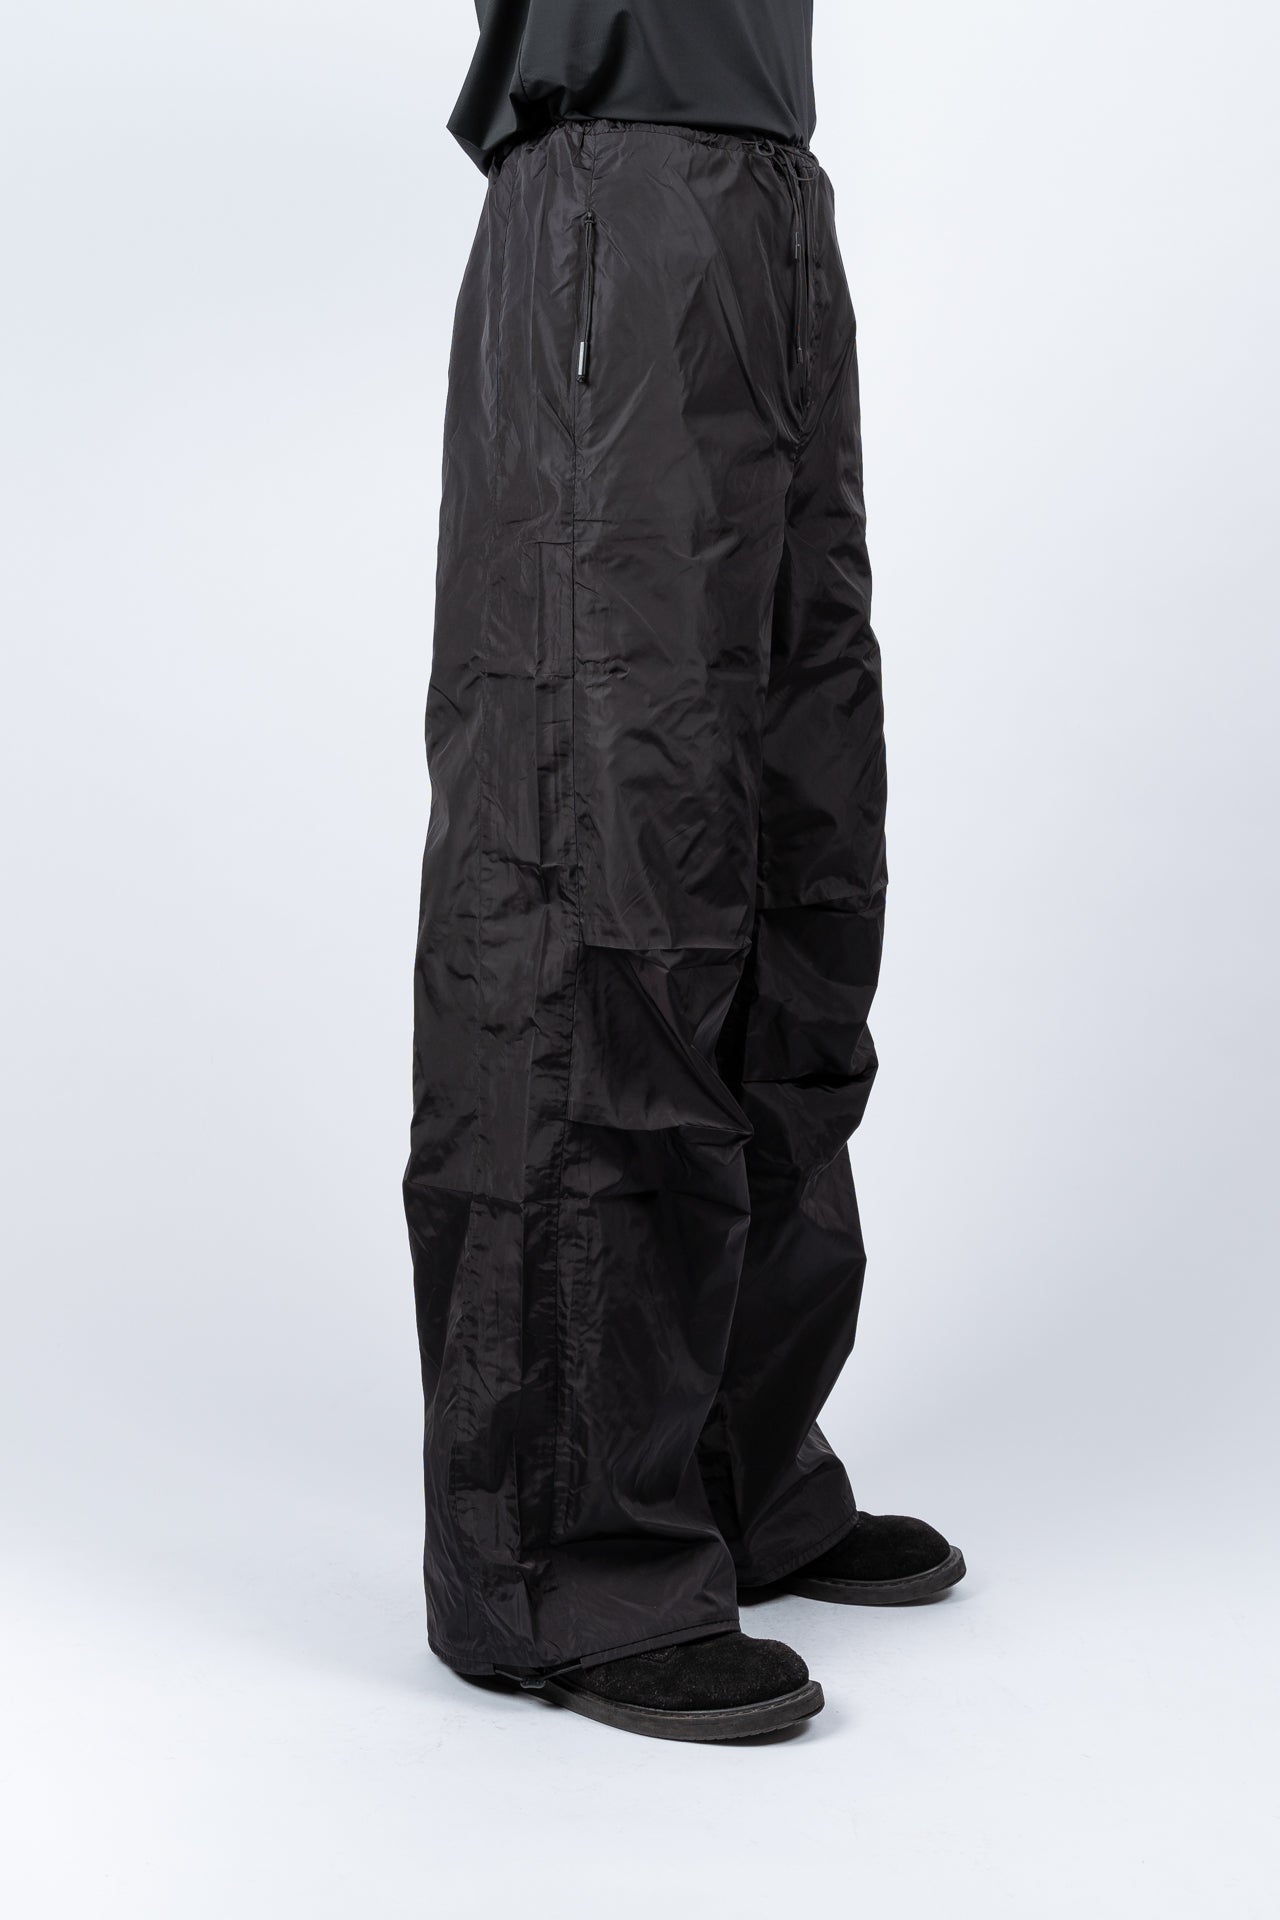 XPONNI Track Pants Women Baggy Pants Y2k Pants Parachute Pants for Women  Y2K Clothing Navy Small